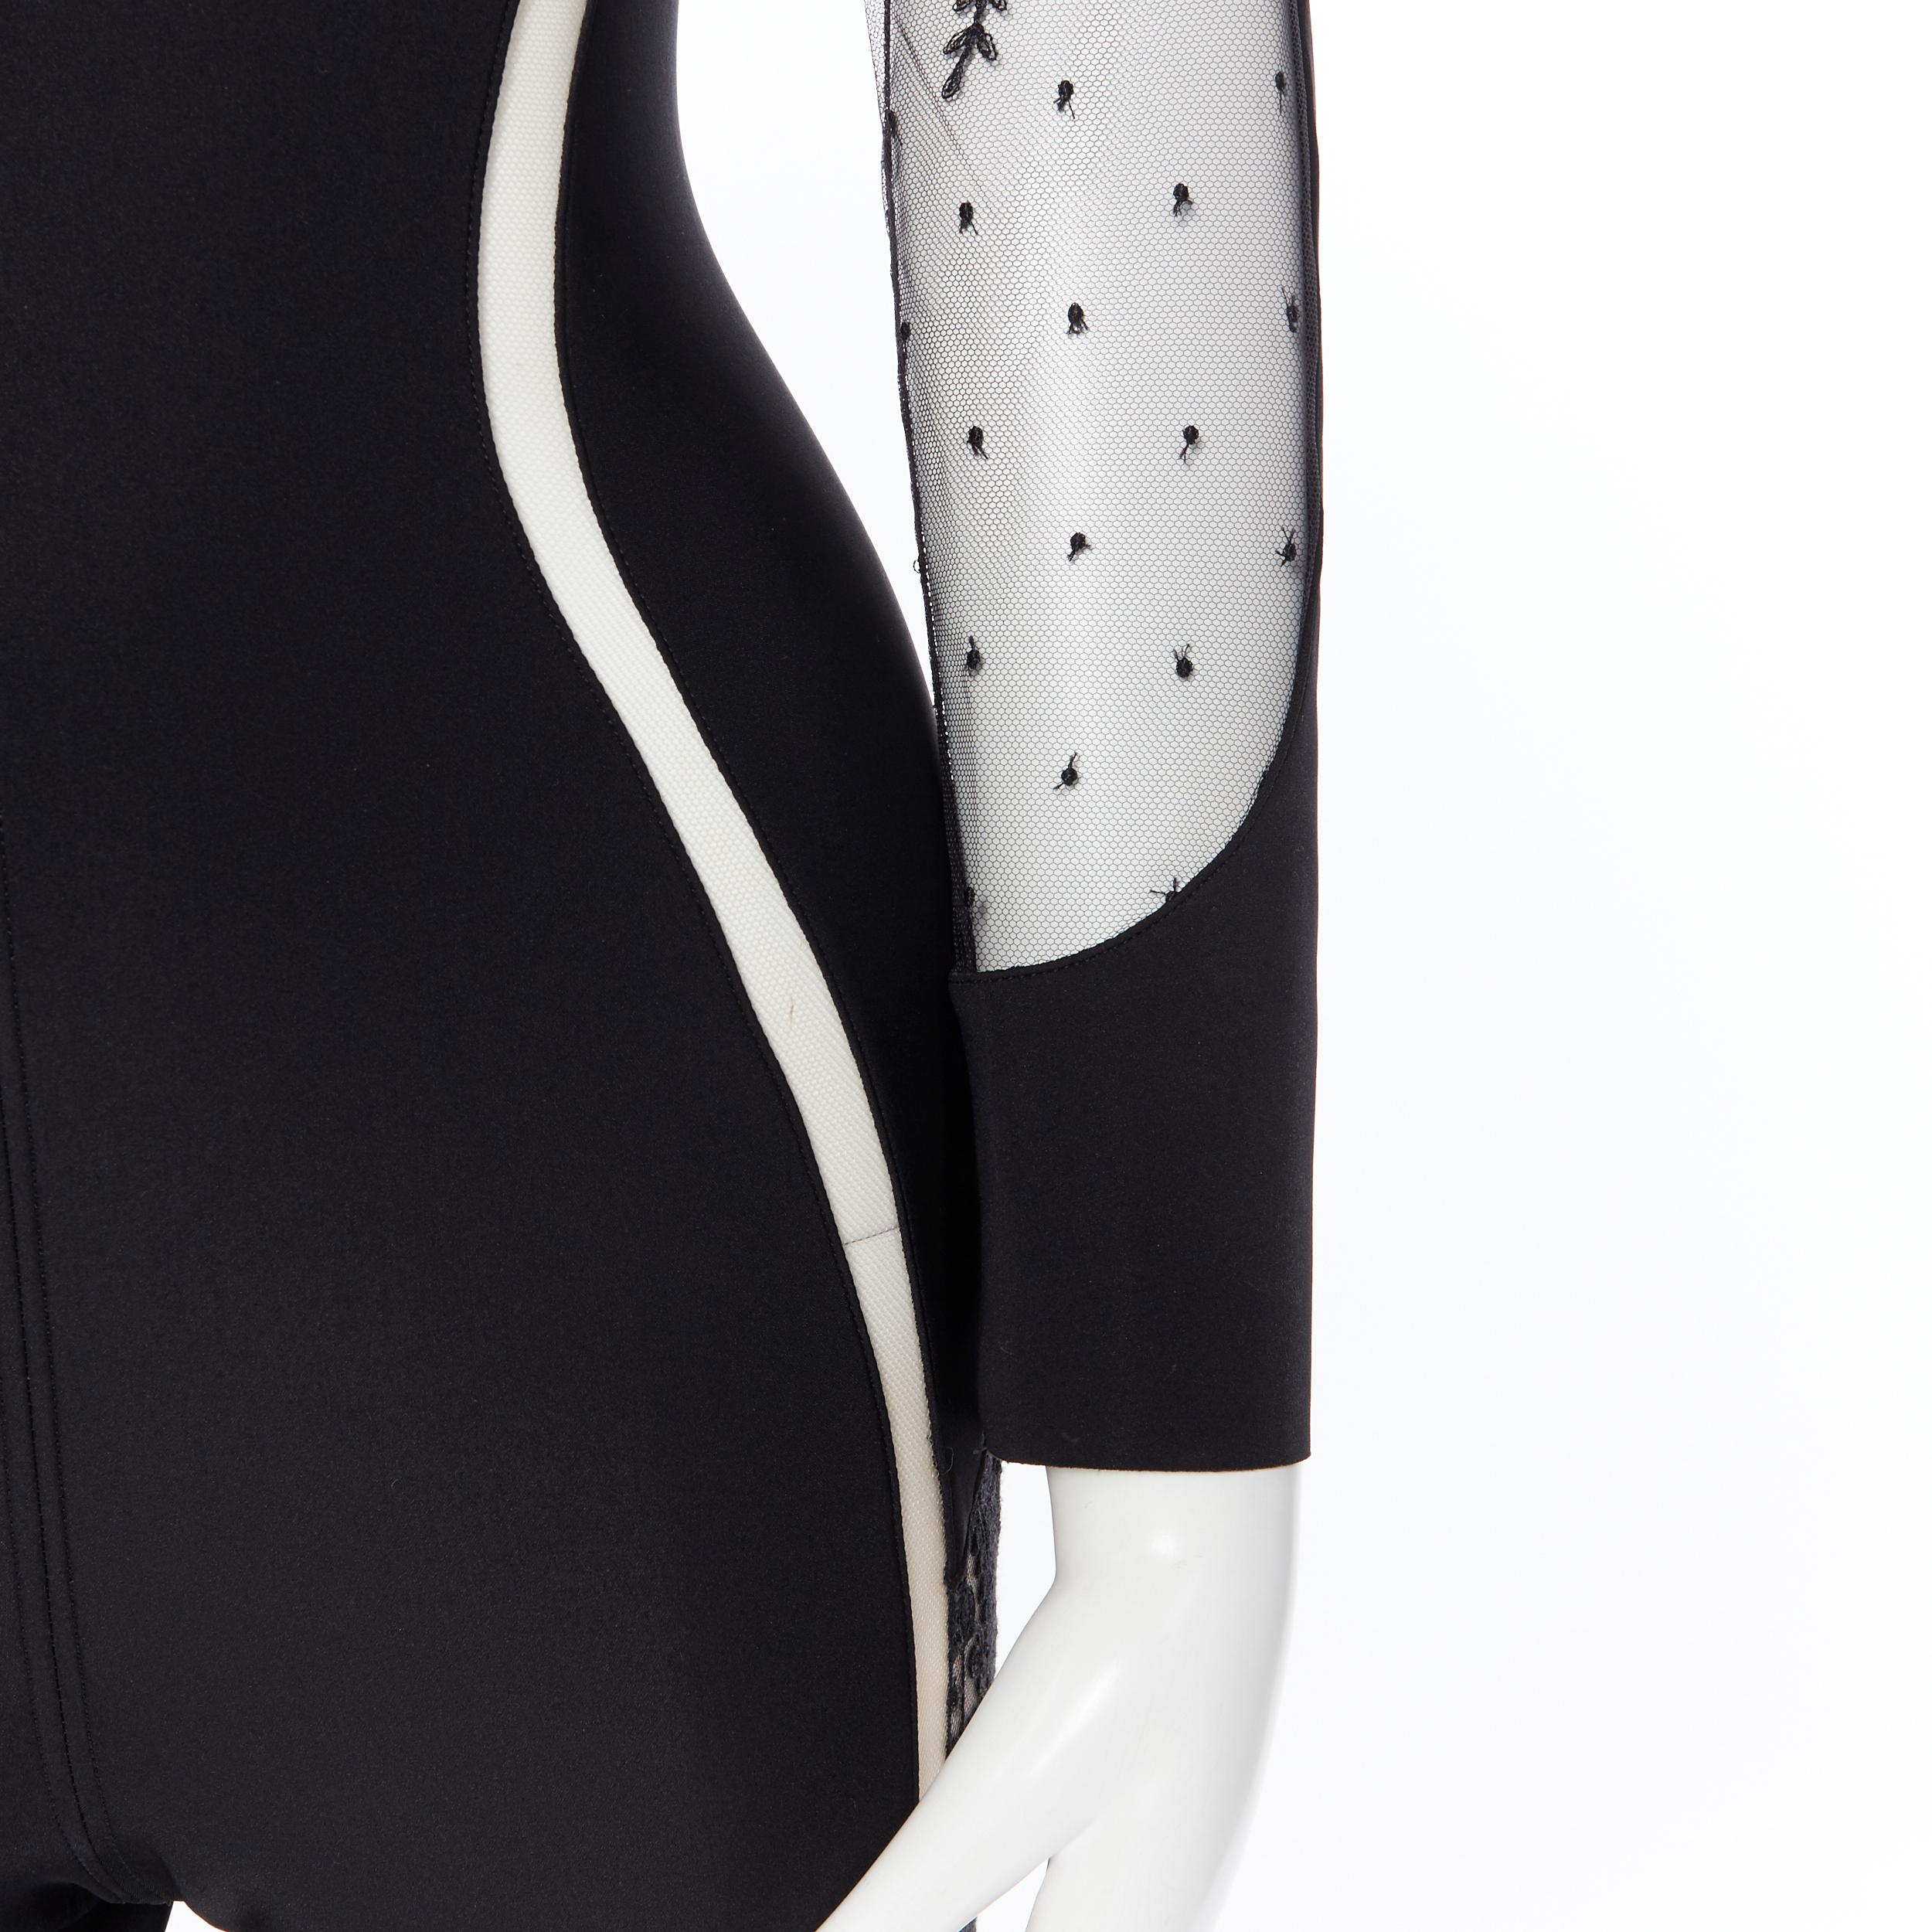 Women's new LA PERLA Desire black neoprene floral lace long sleeve bodycon jumpsuit M